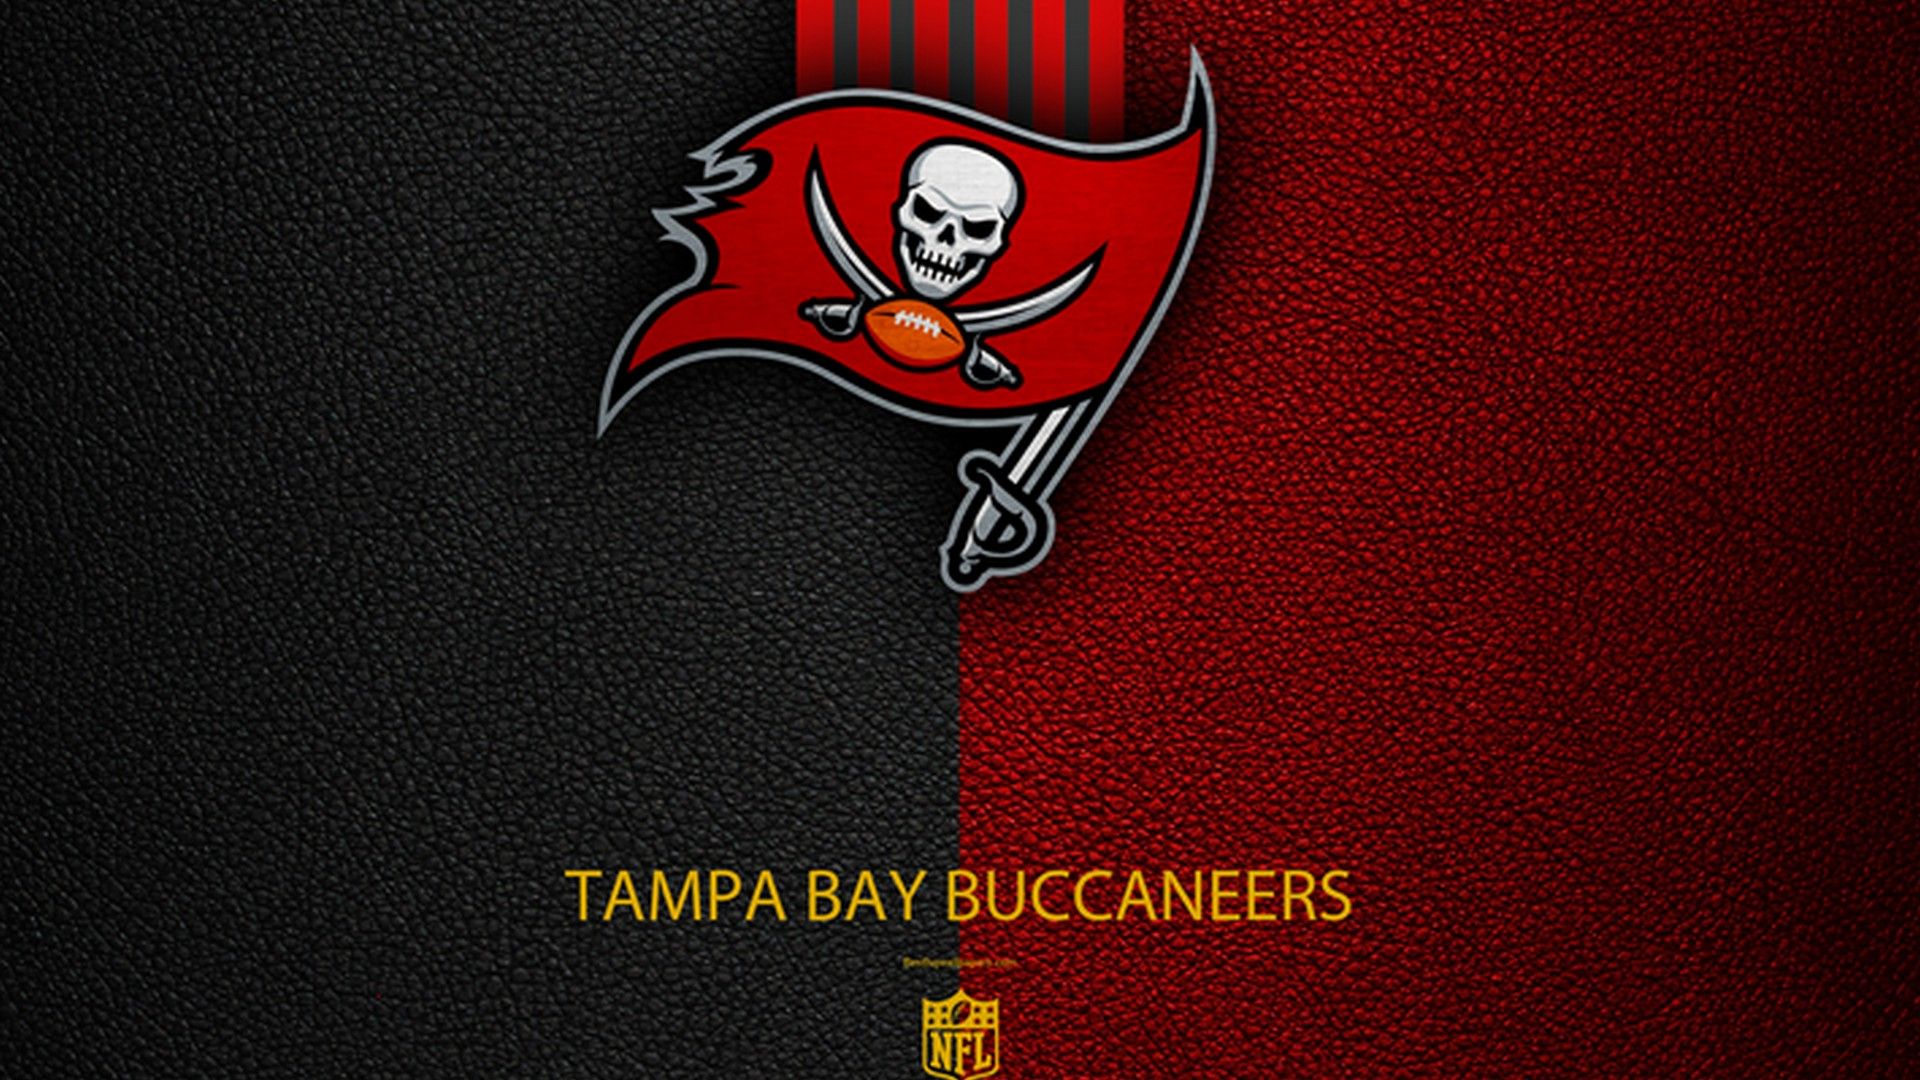 Tampa Bay Buccaneers Wallpaper For Mac Backgrounds   2022 NFL